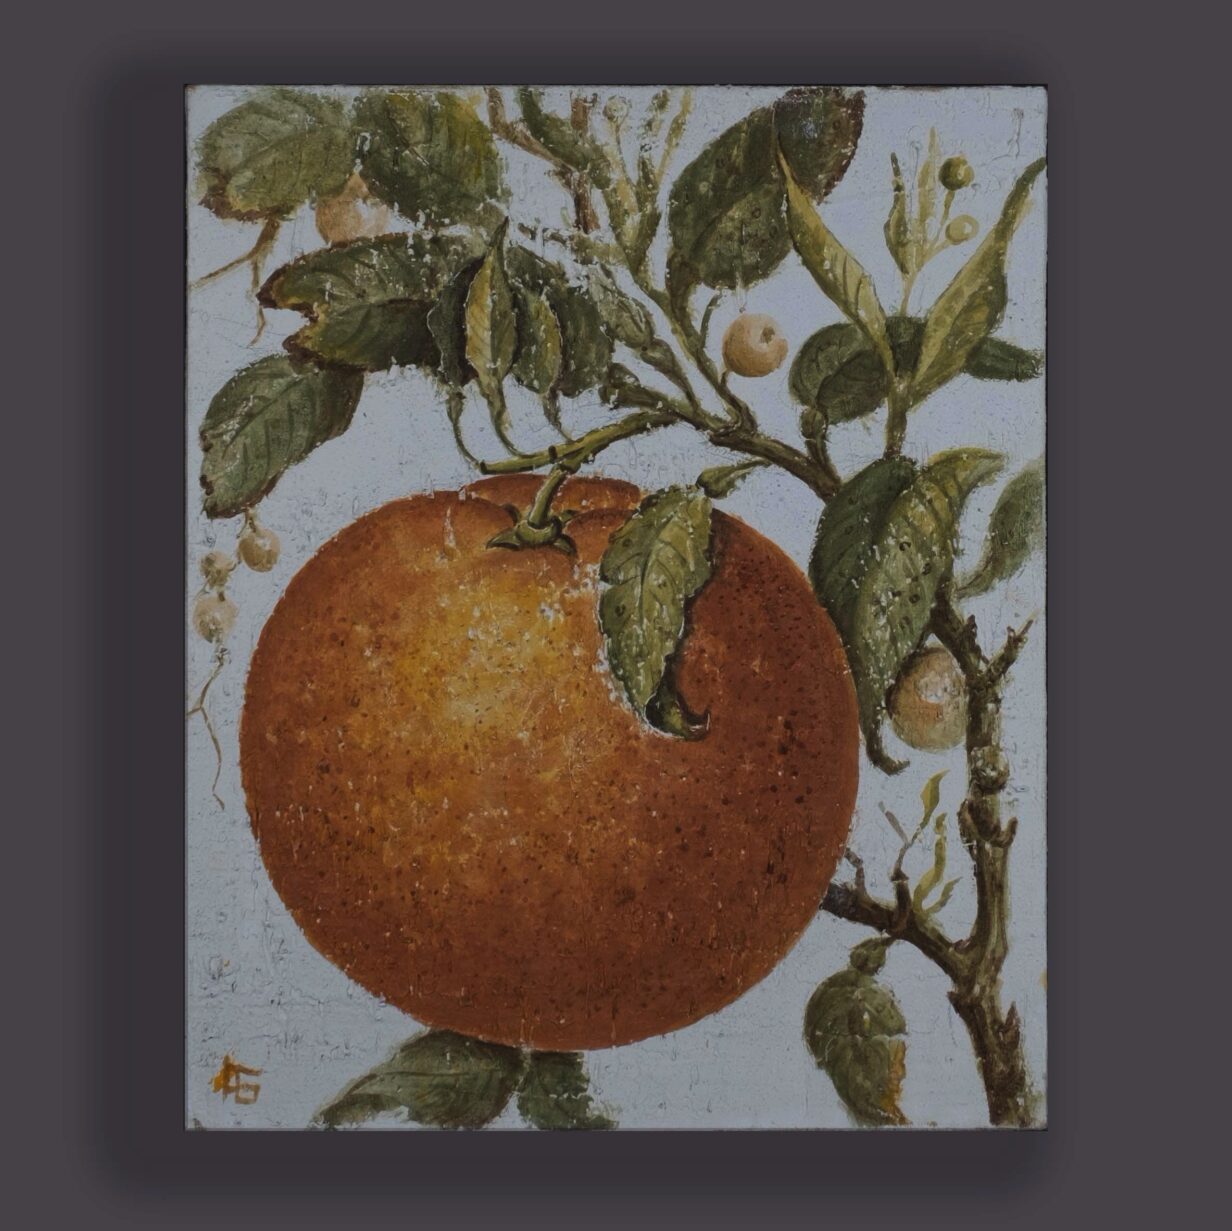 Two oils on canvas - a stylised orange and lemon